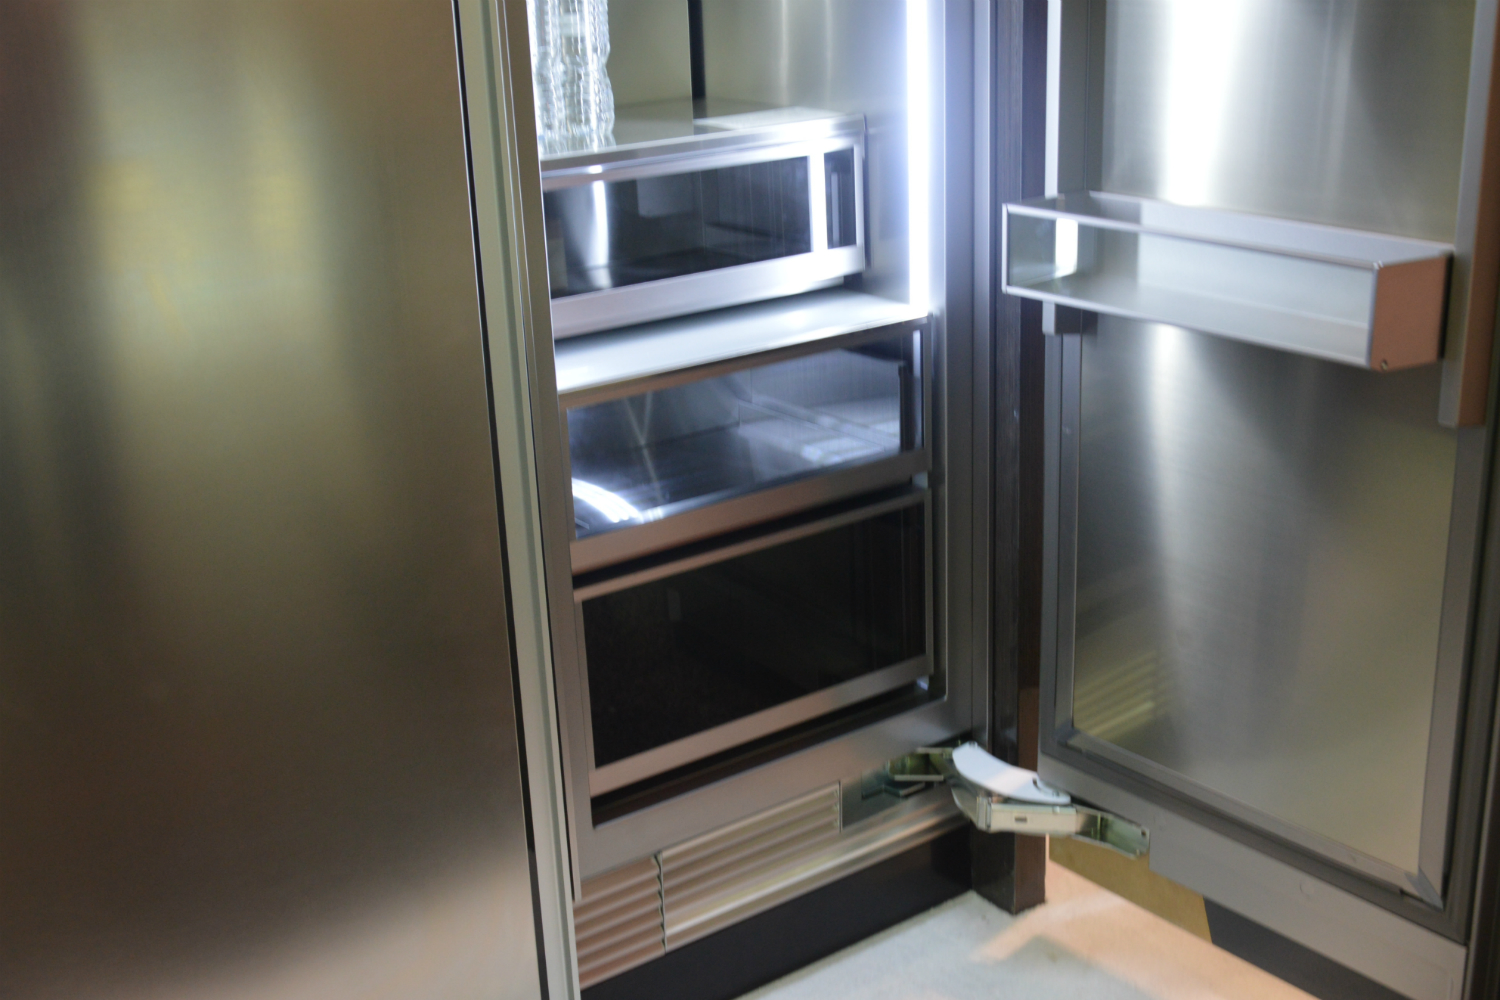 dacor heritage column refrigerator kbis 2017 fridge 3